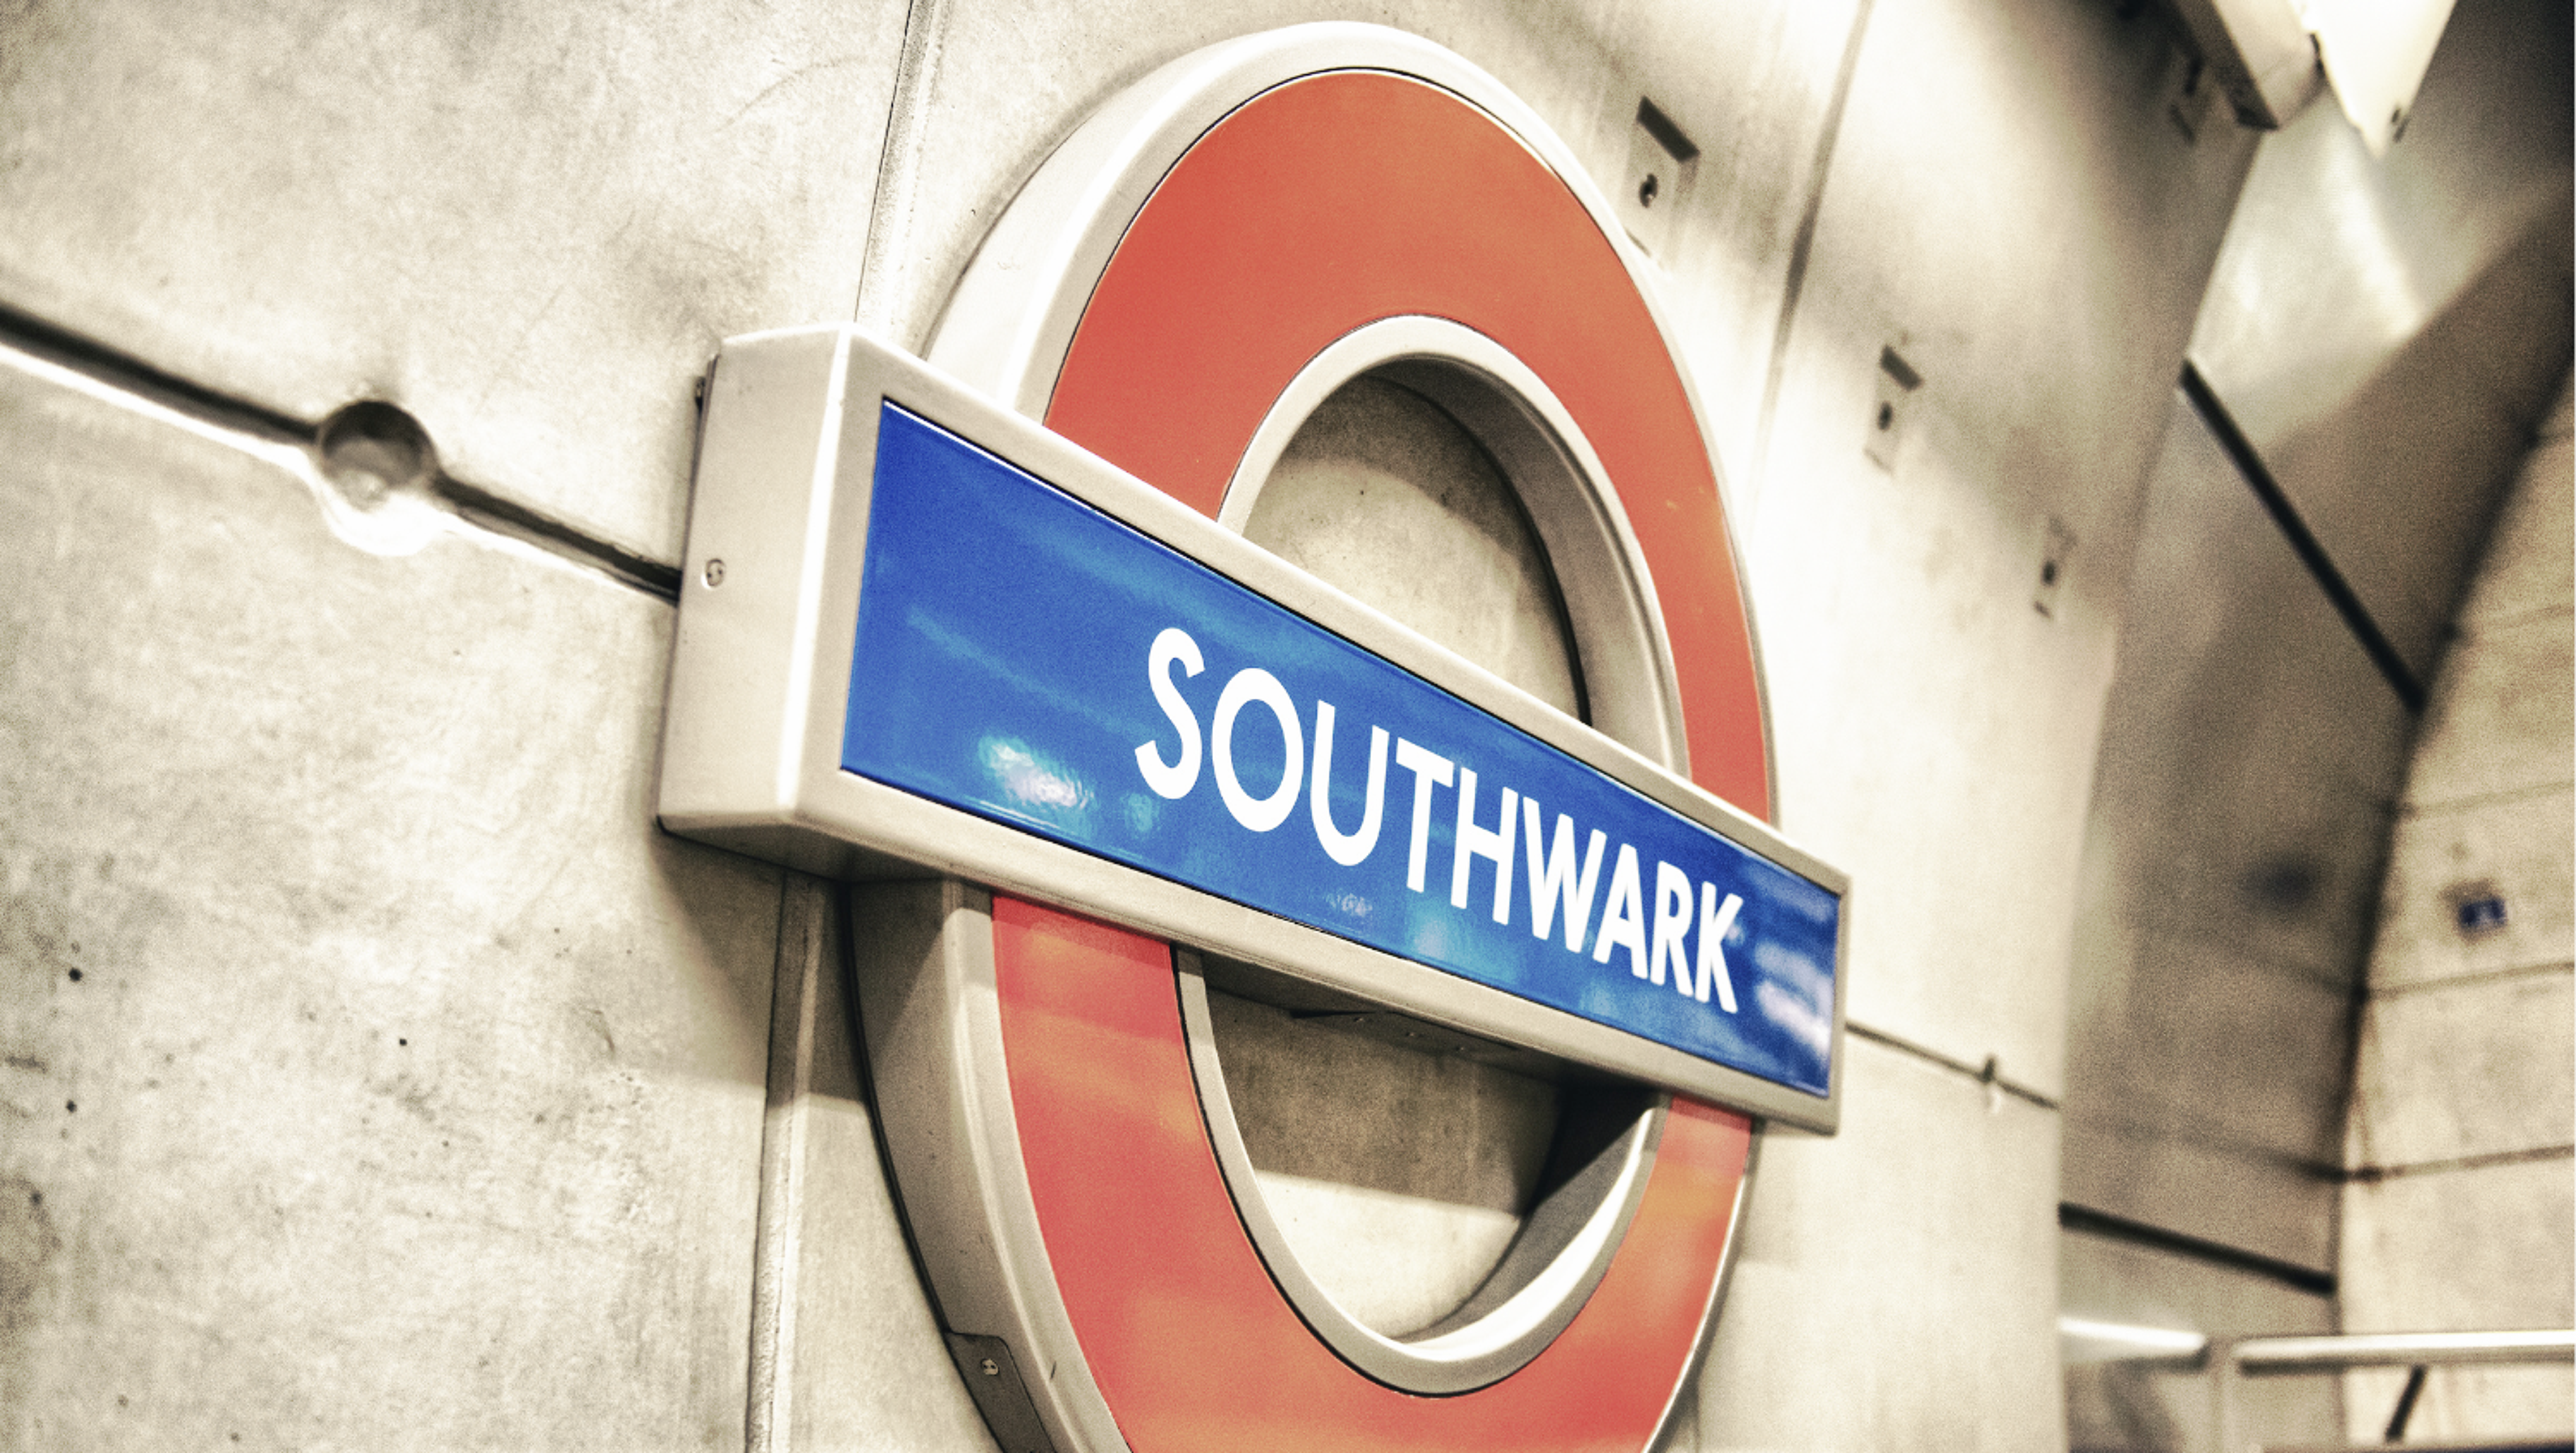 Southwark metro station sign